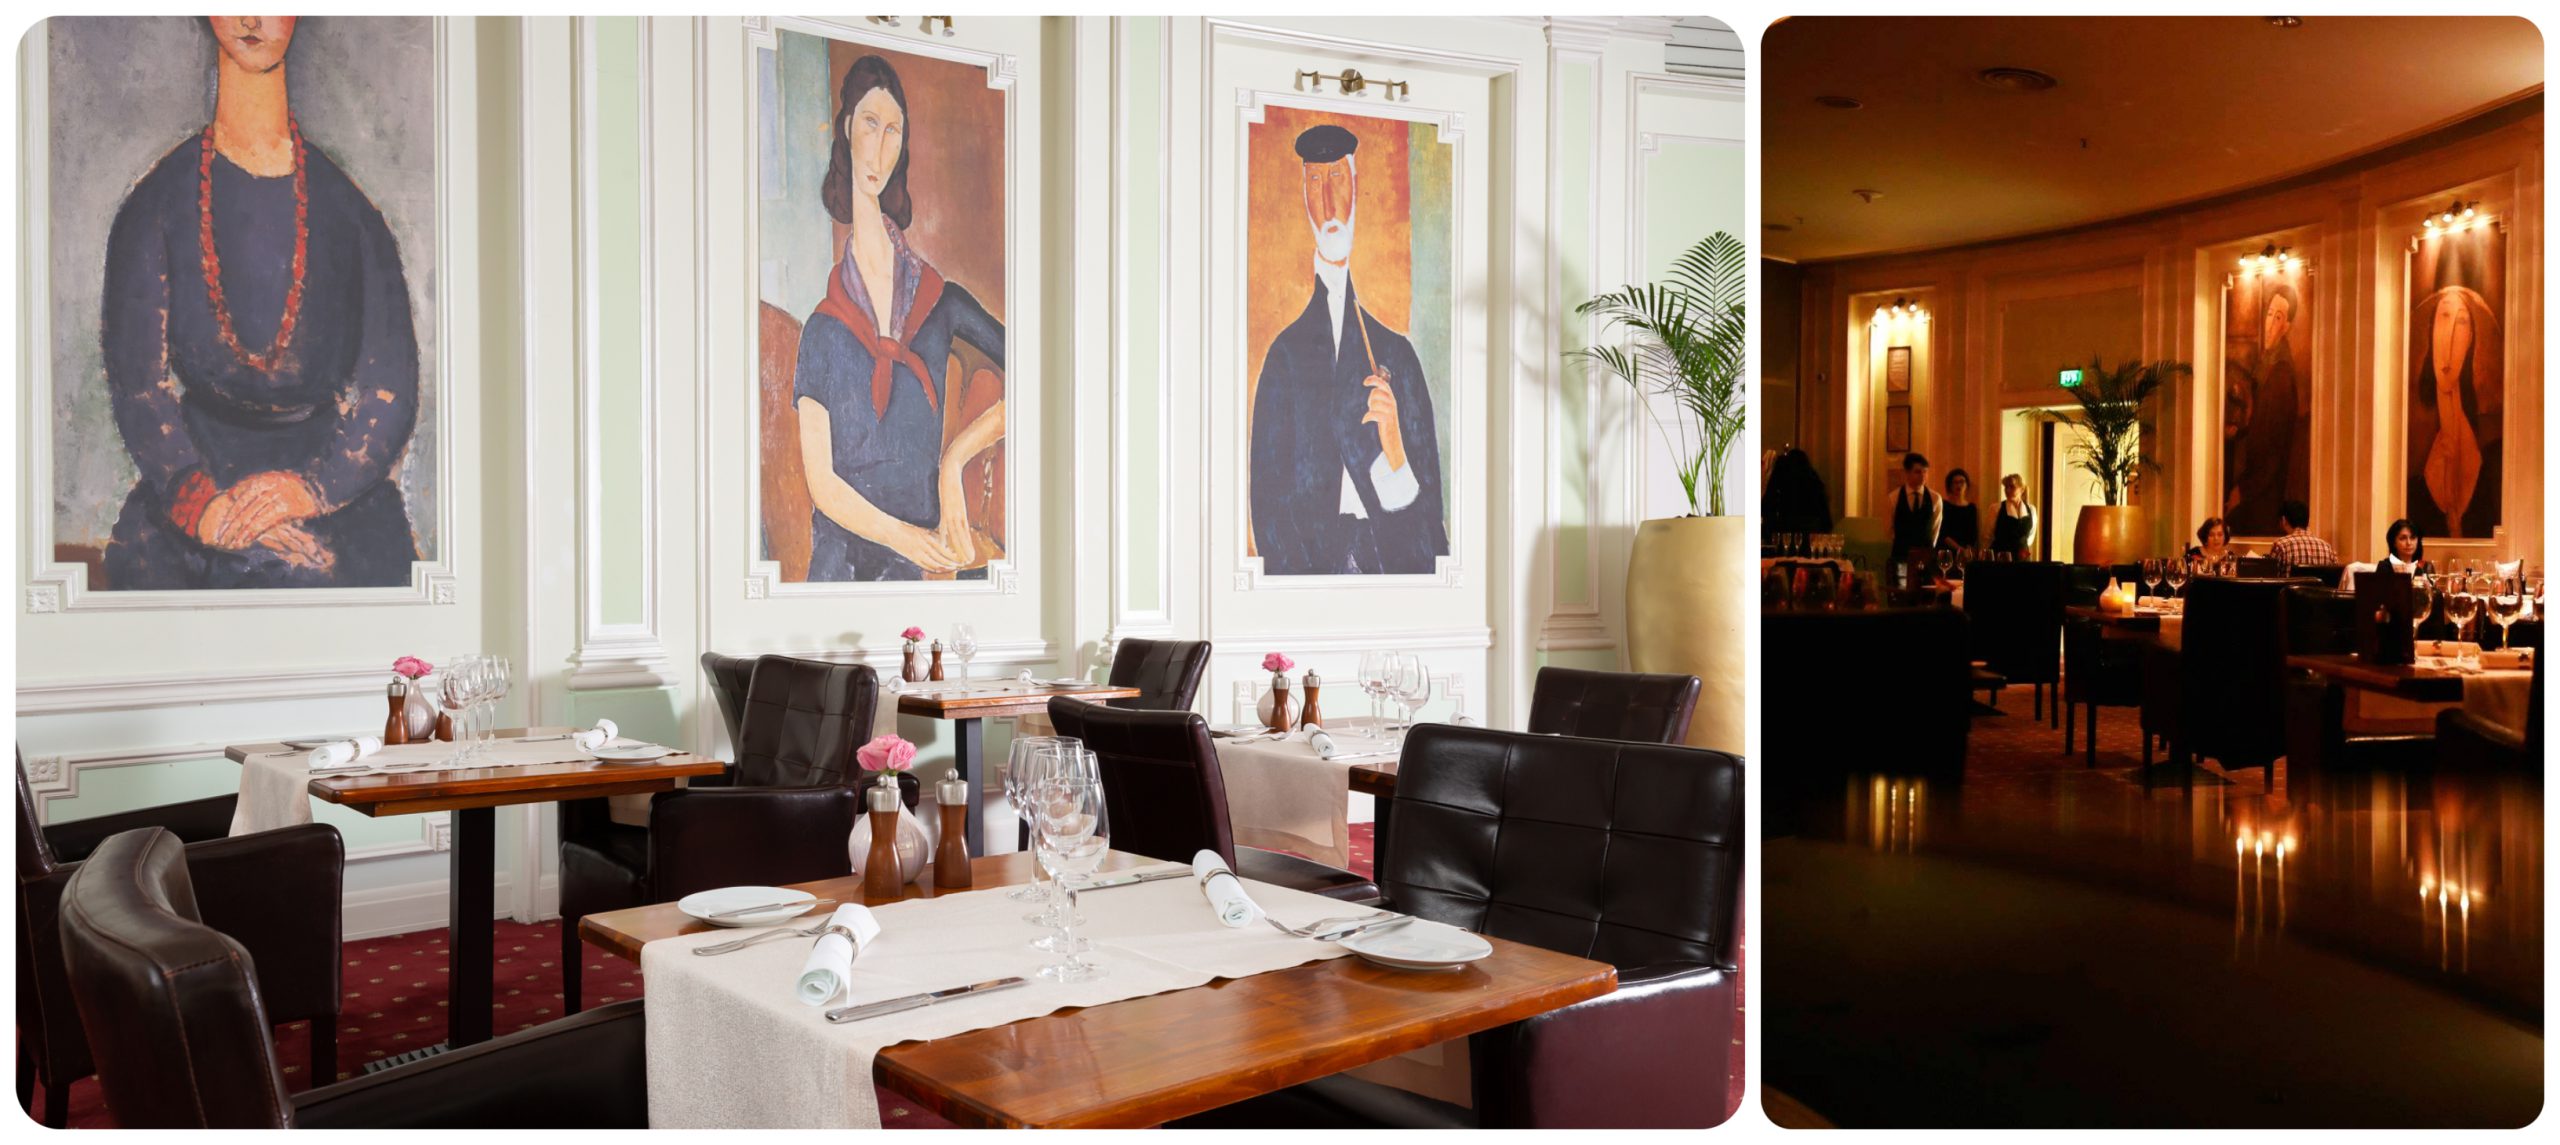 colaj de 2 fotografii din restaurant Modigliani, una cu perete alb cu 3 tablouri copie dupa lucrarile pictorului Modigliani, mese si scaune de lemn maro si stergare albe, a doua cu restaurantul in lumina difuza si oameni luand masa